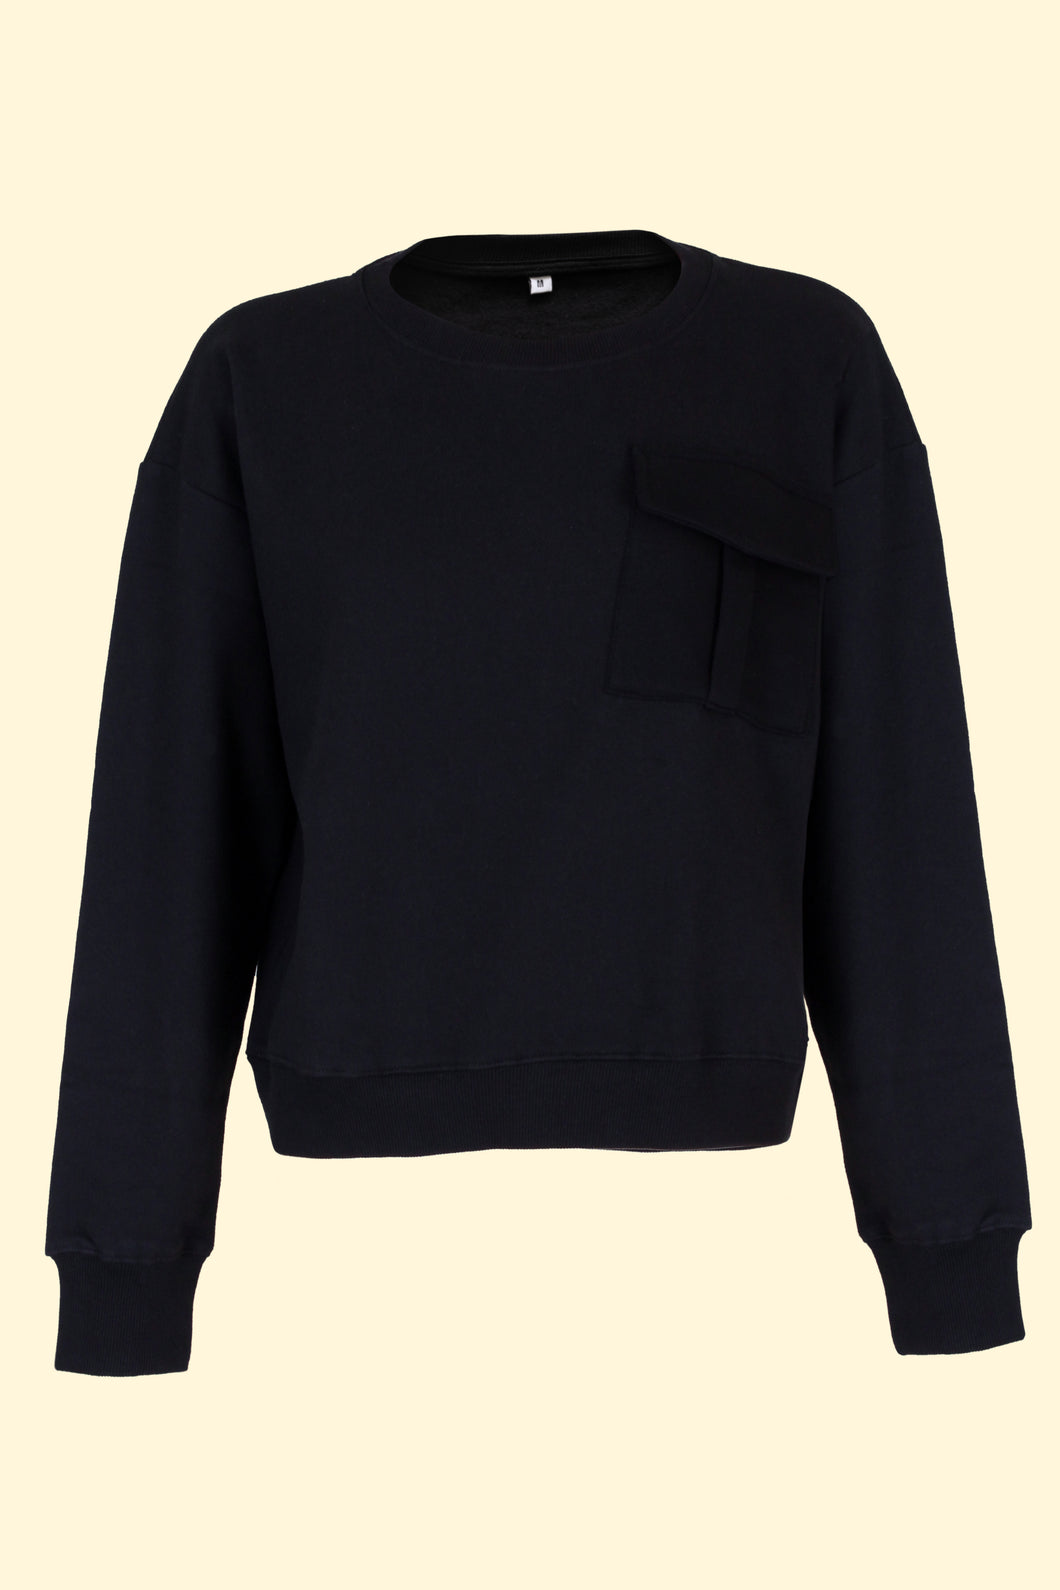 Black Crop Sweater.